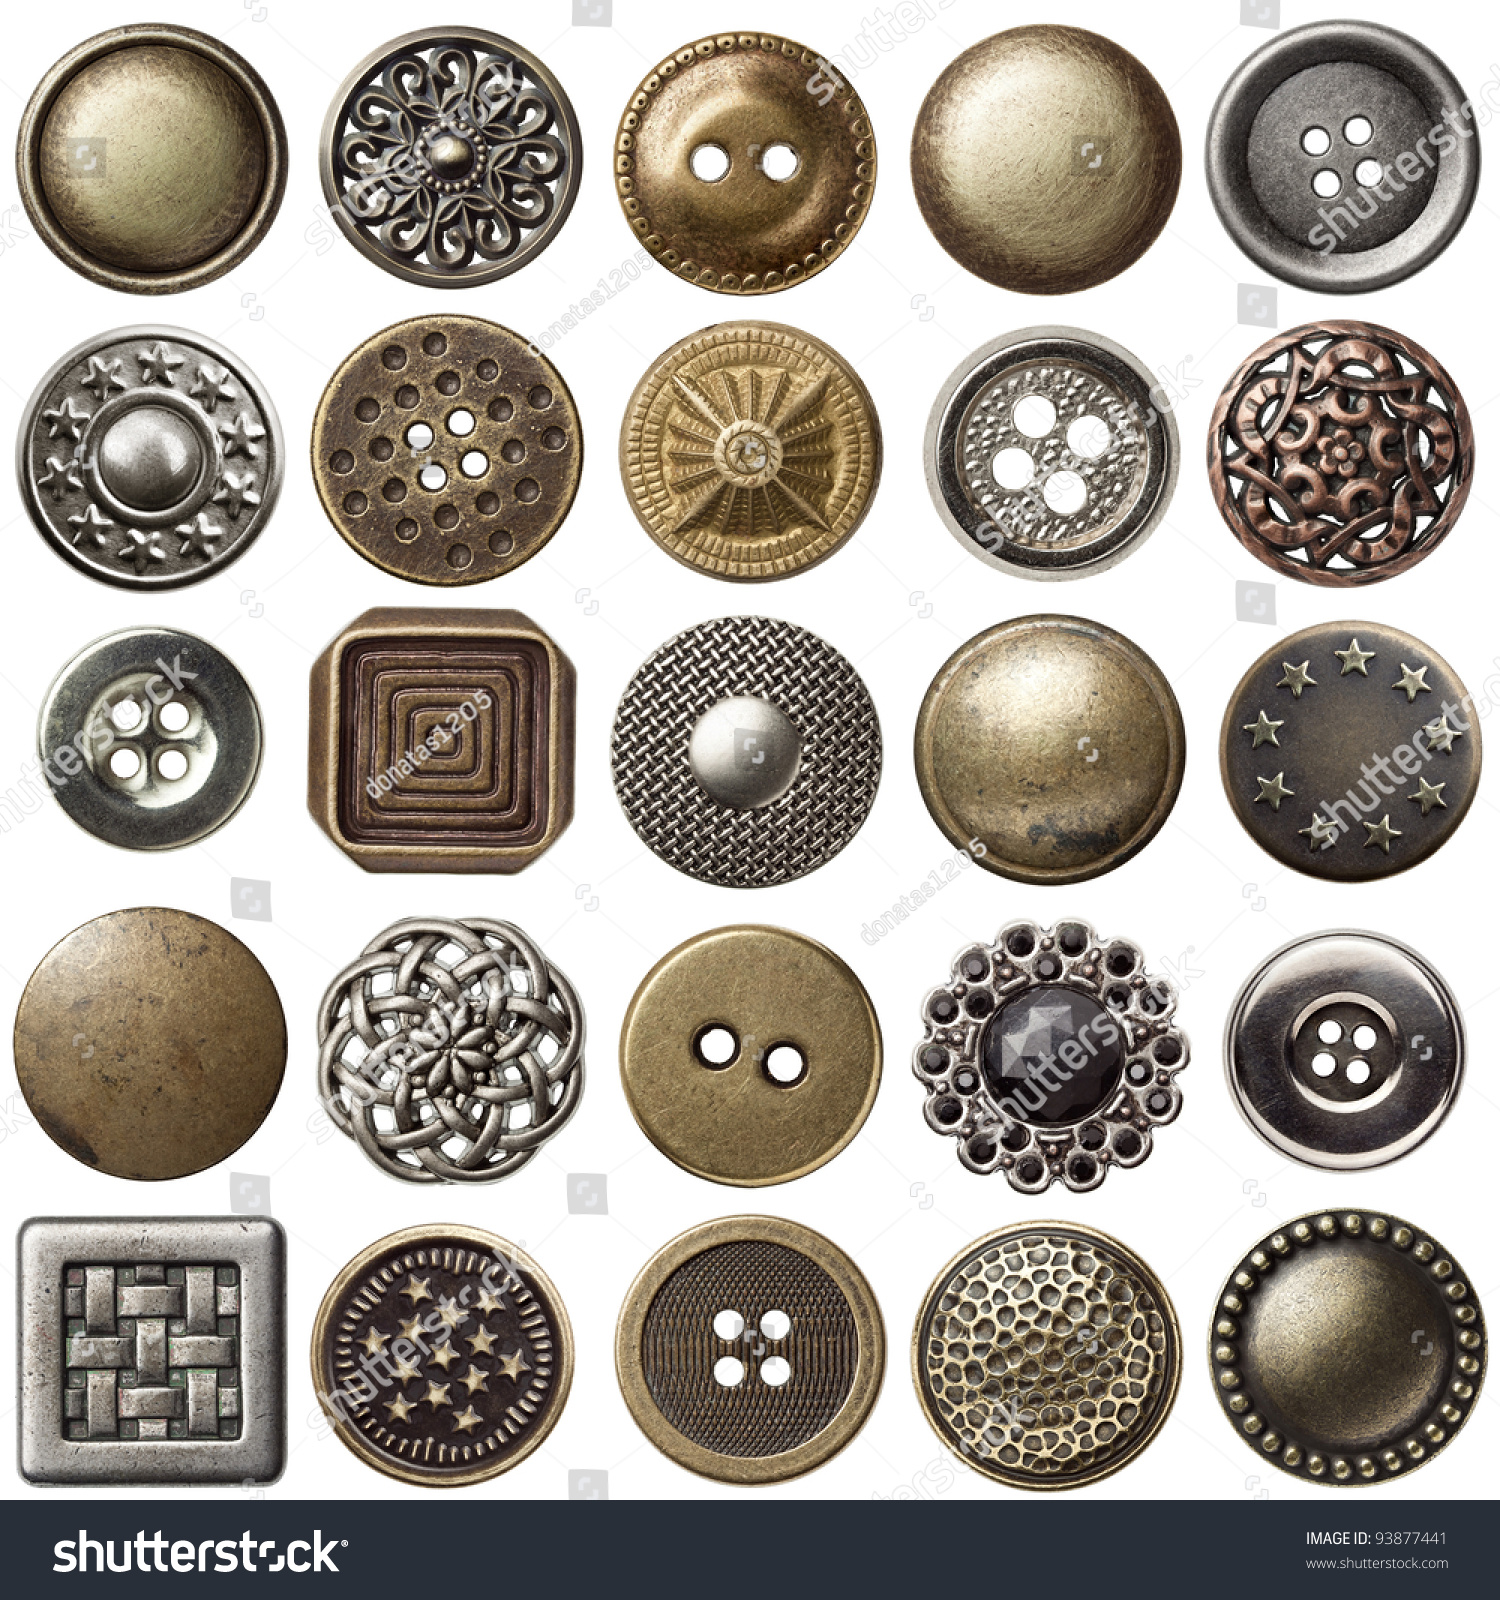 Vintage Button Collection 36